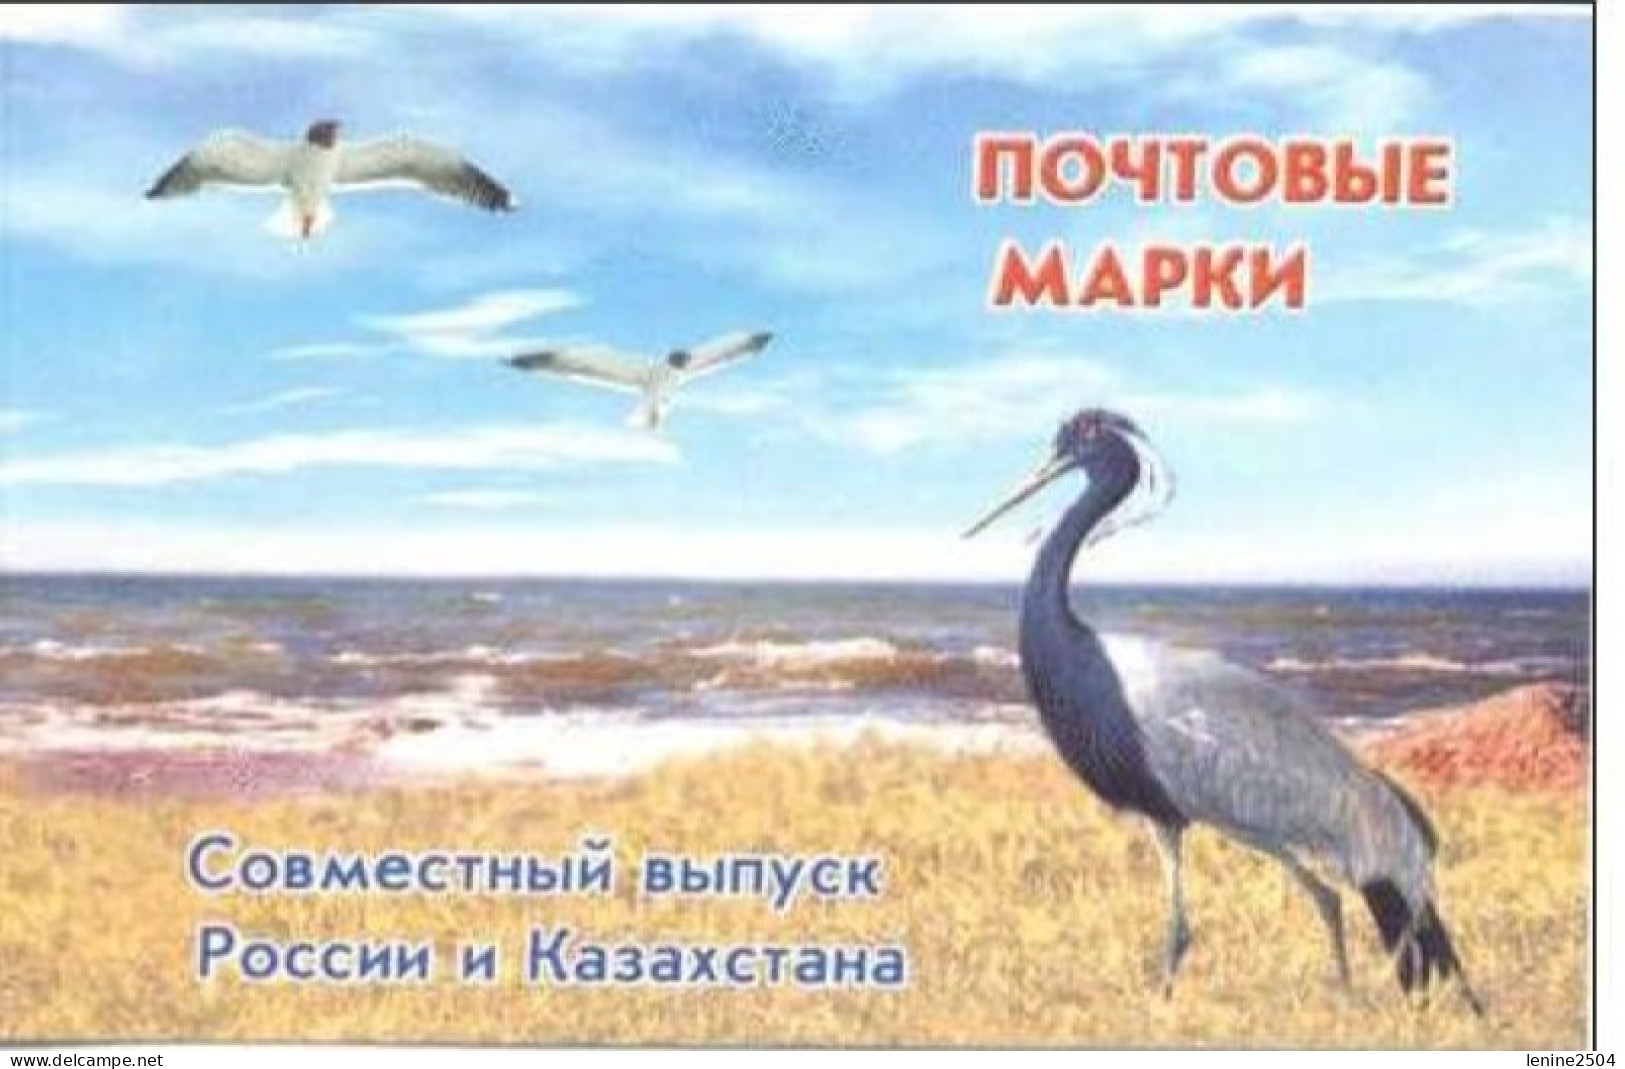 Russie 2002 Yvert N° 6656-6657 ** Faune Emission 1er Jour Carnet Prestige Folder Booklet + Conjoint Kazakhstan - Neufs